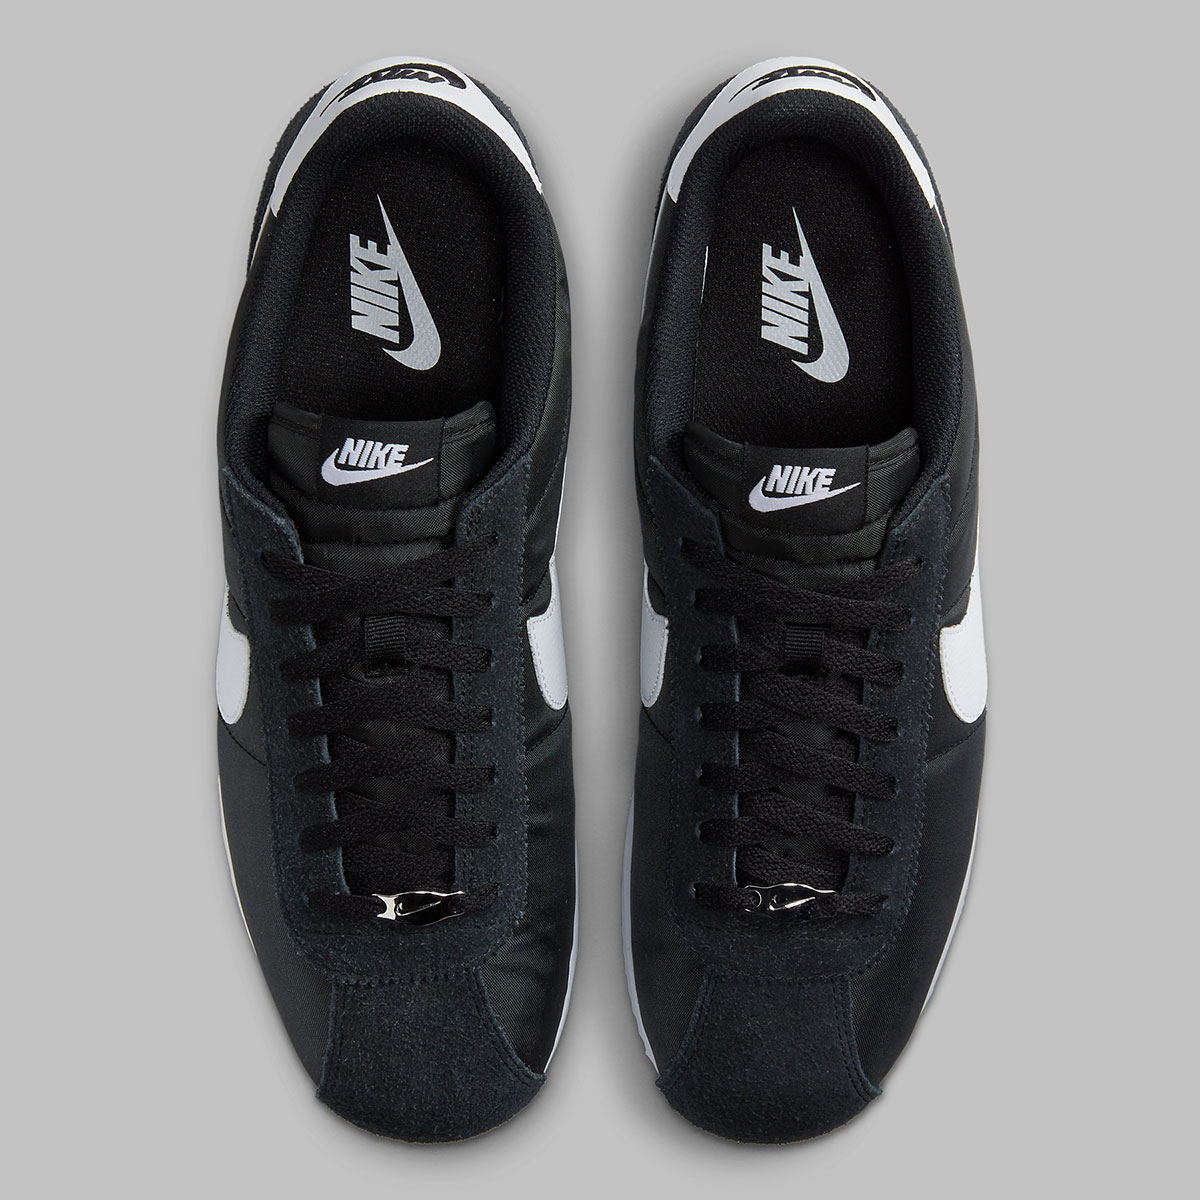 Nike Cortez Black White Hf0263 001 8